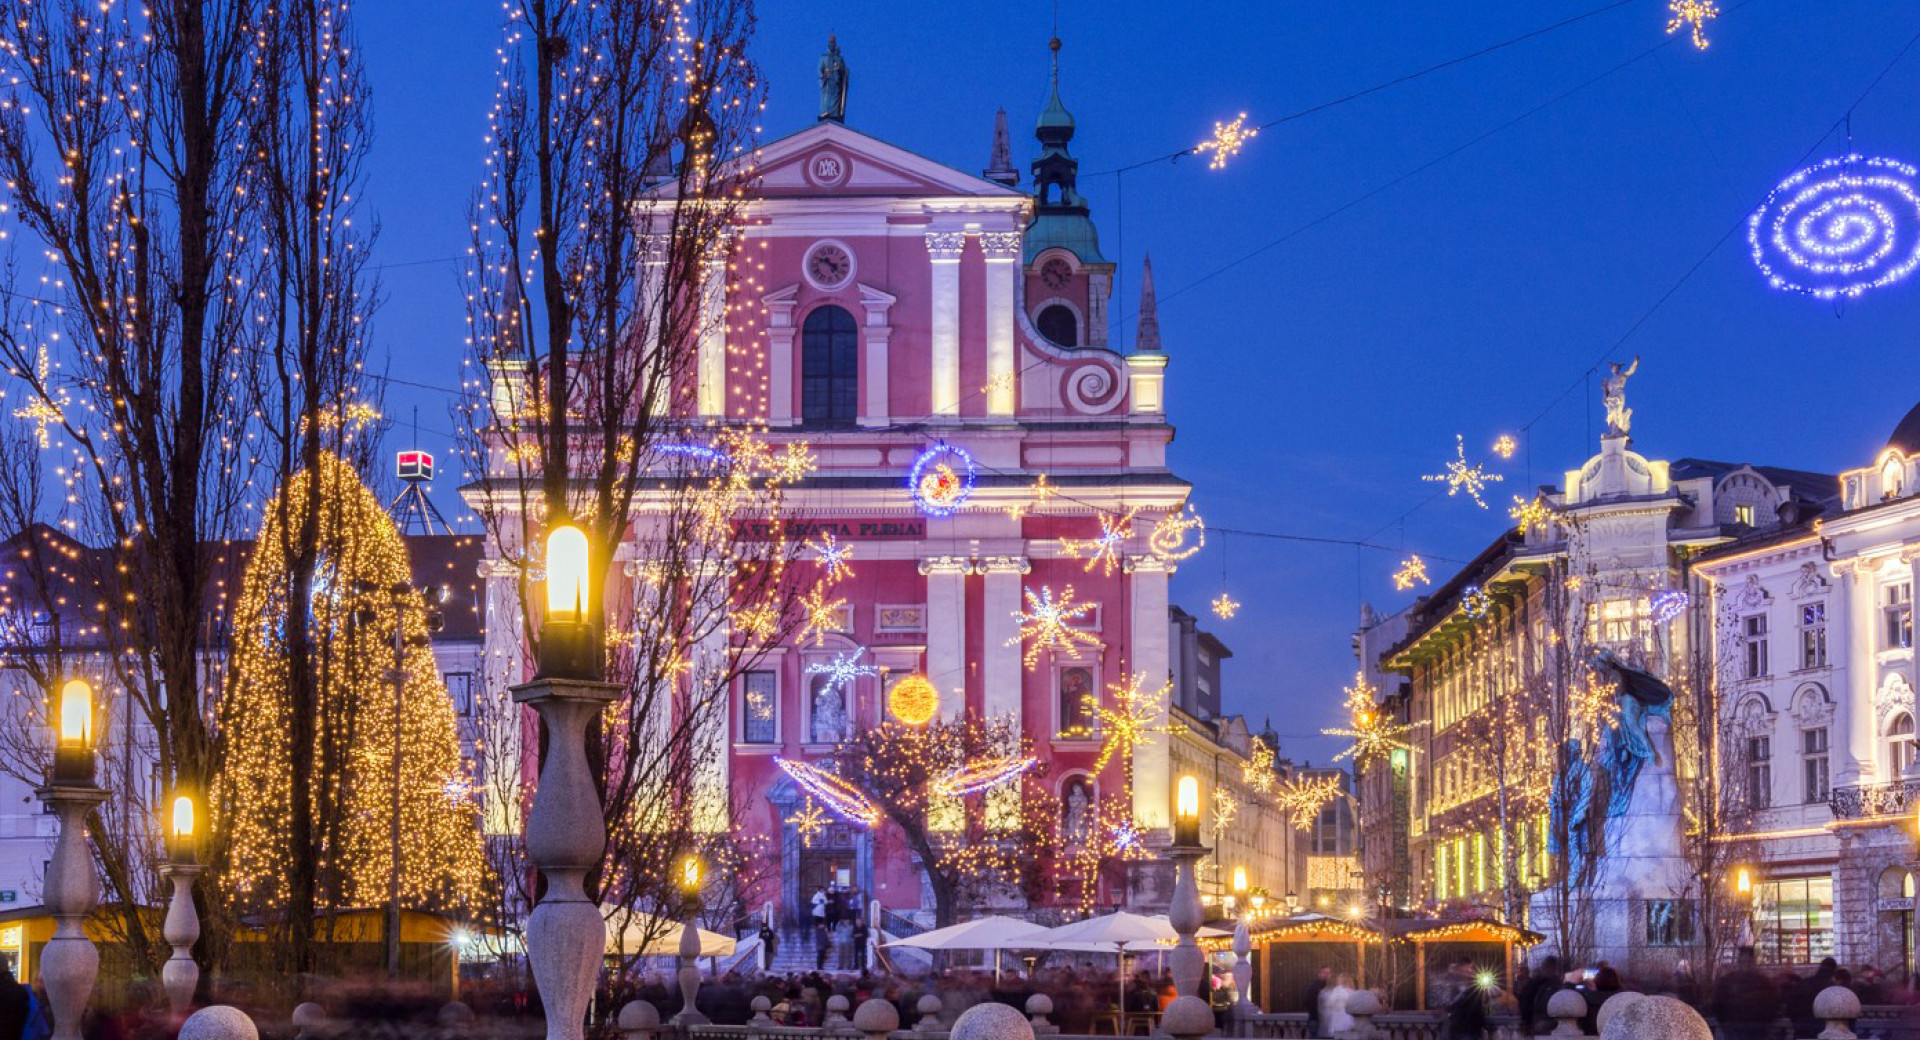 A city illuminated with festive lights.